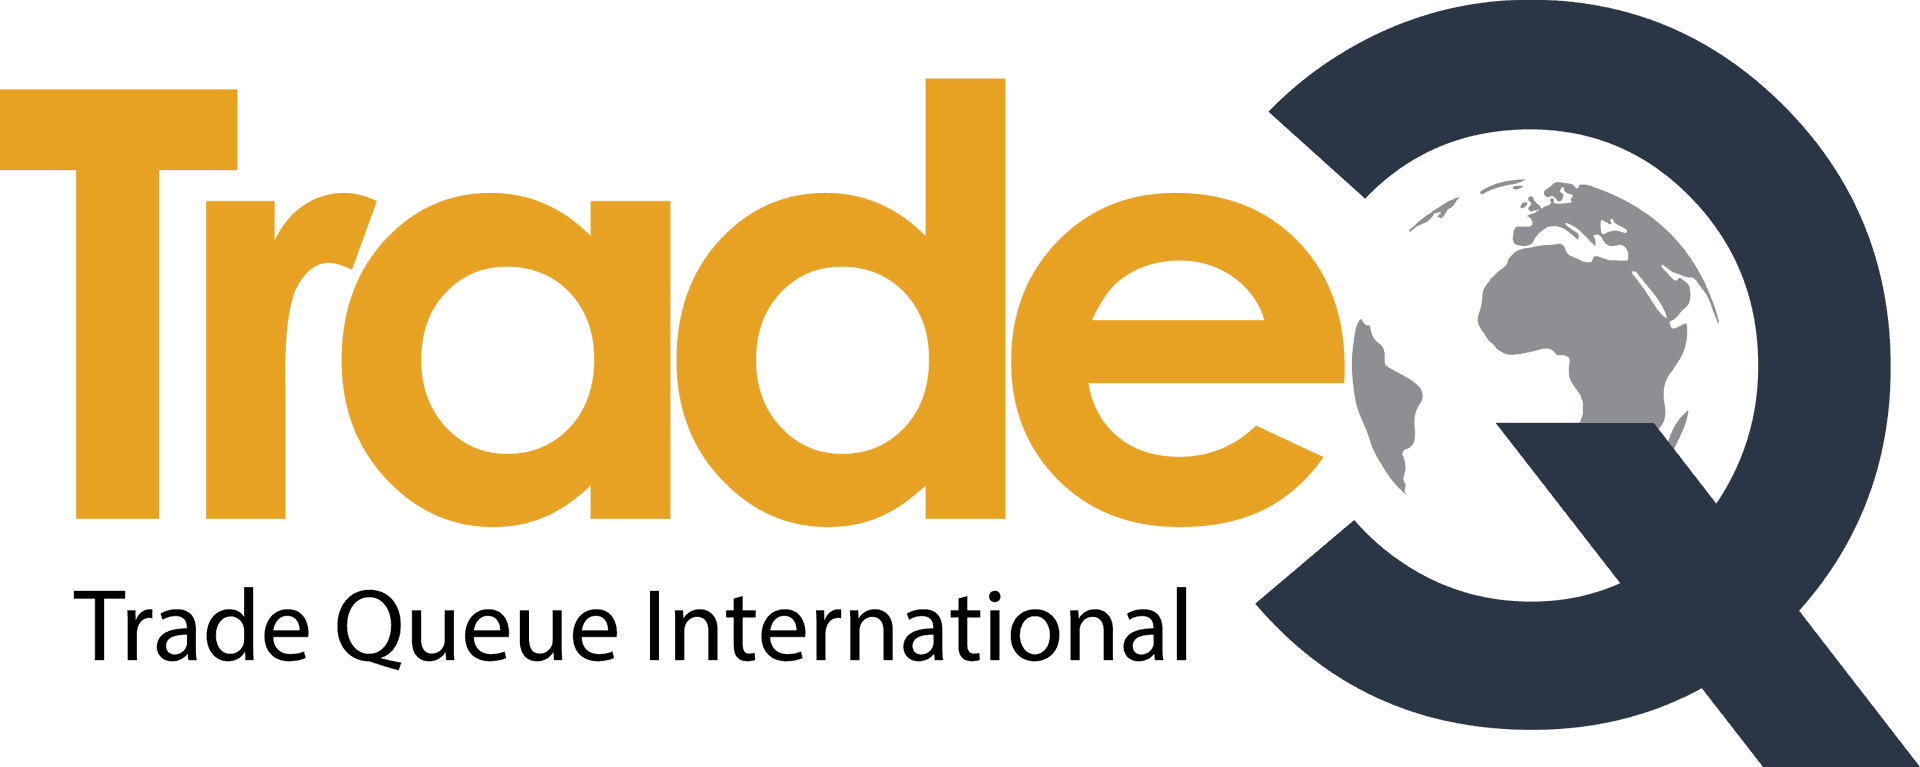 Trade Queue International Logo PNG